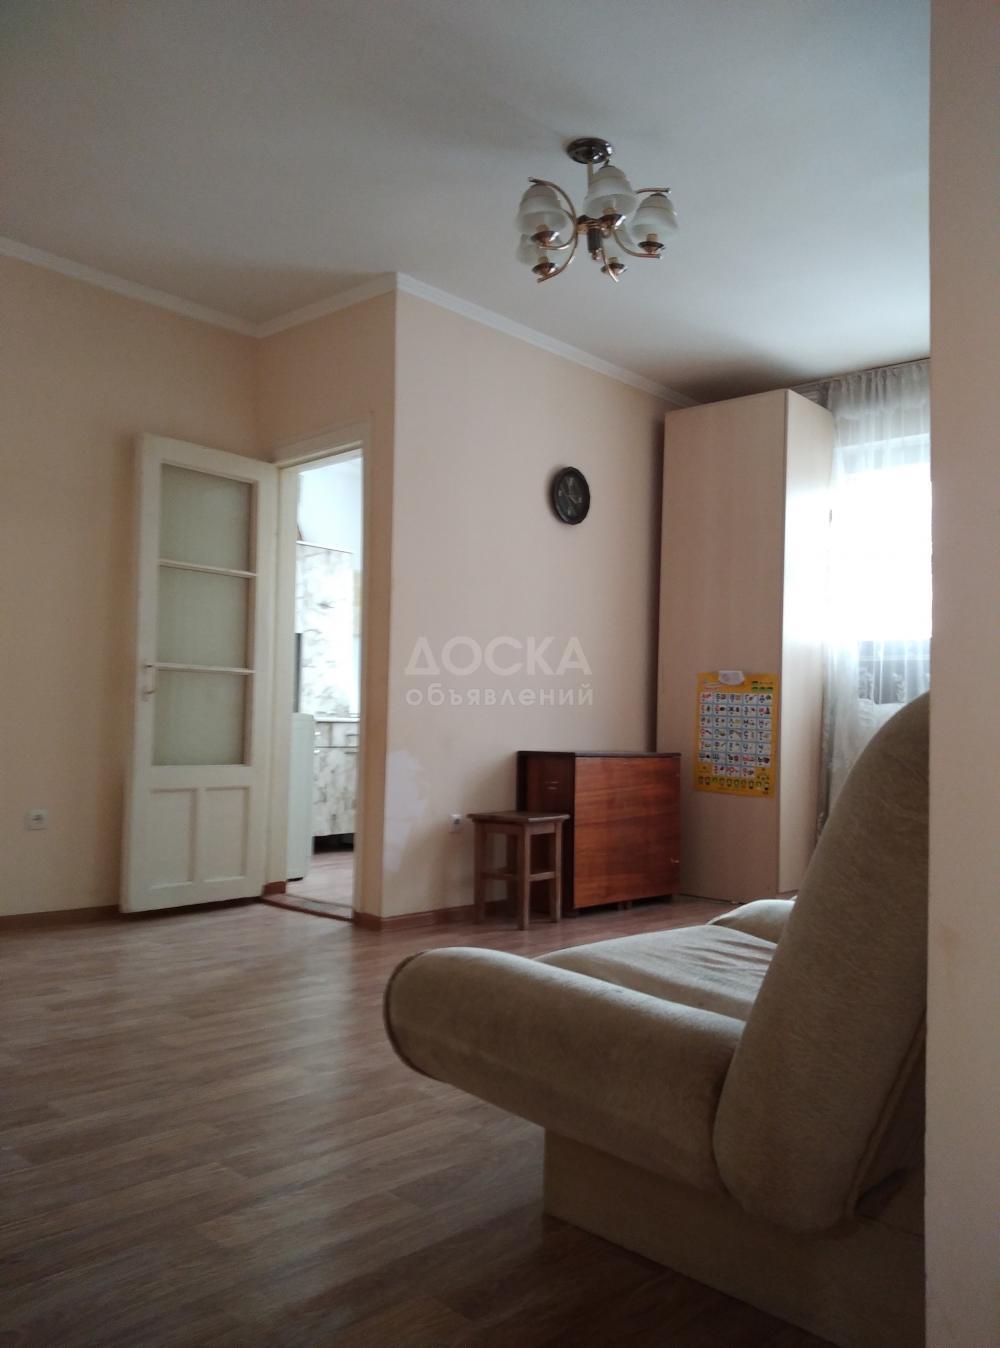 Продаю 3-комнатную квартиру, 54кв. м., этаж - 2/2, ул. Джаманбаева/Табалдиева.